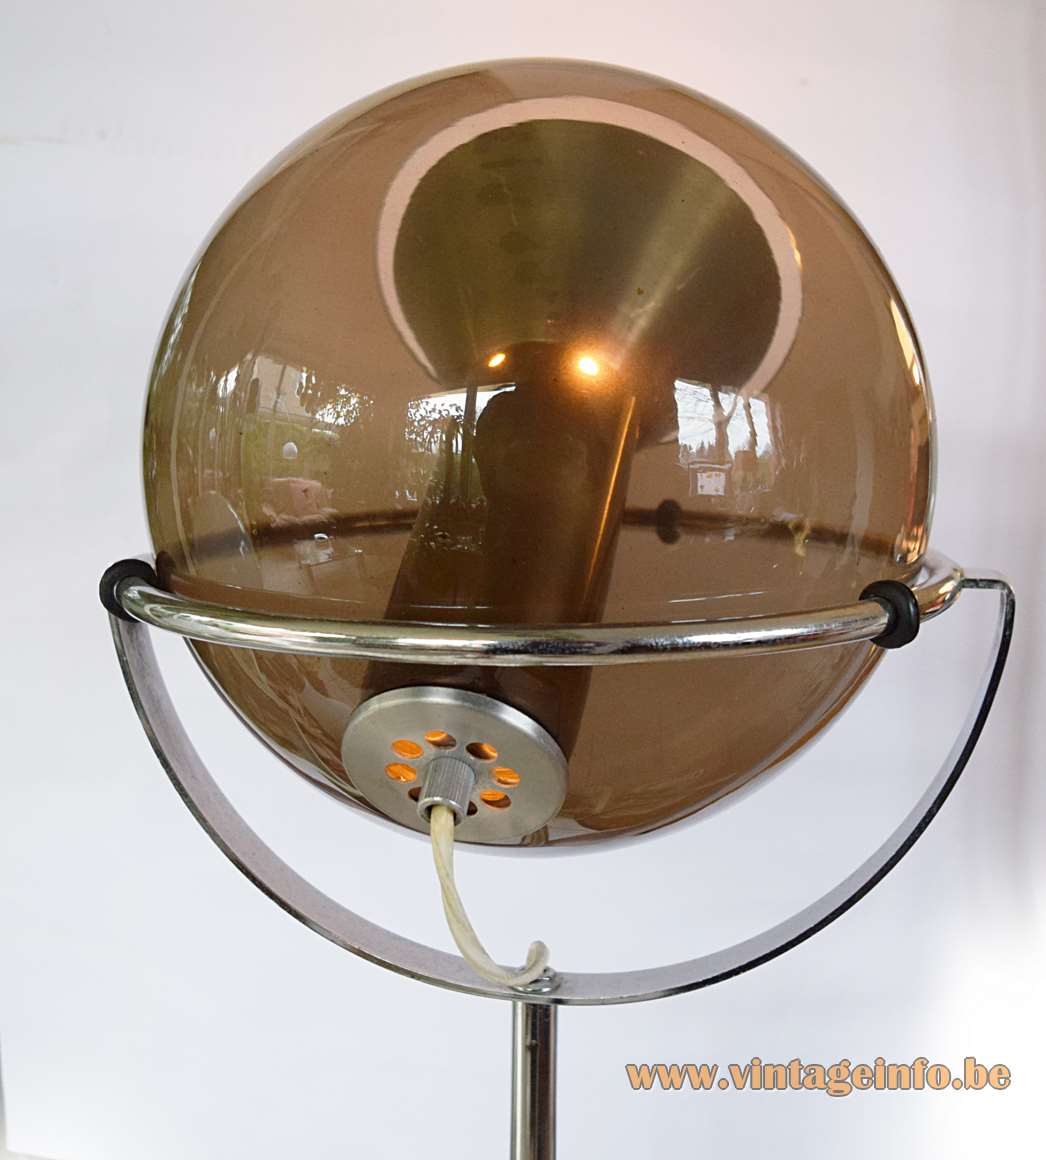 Raak Globe floor lamp tripod base chrome rod smoked glass globe design: Frank Ligtelijn 1950s 1960s